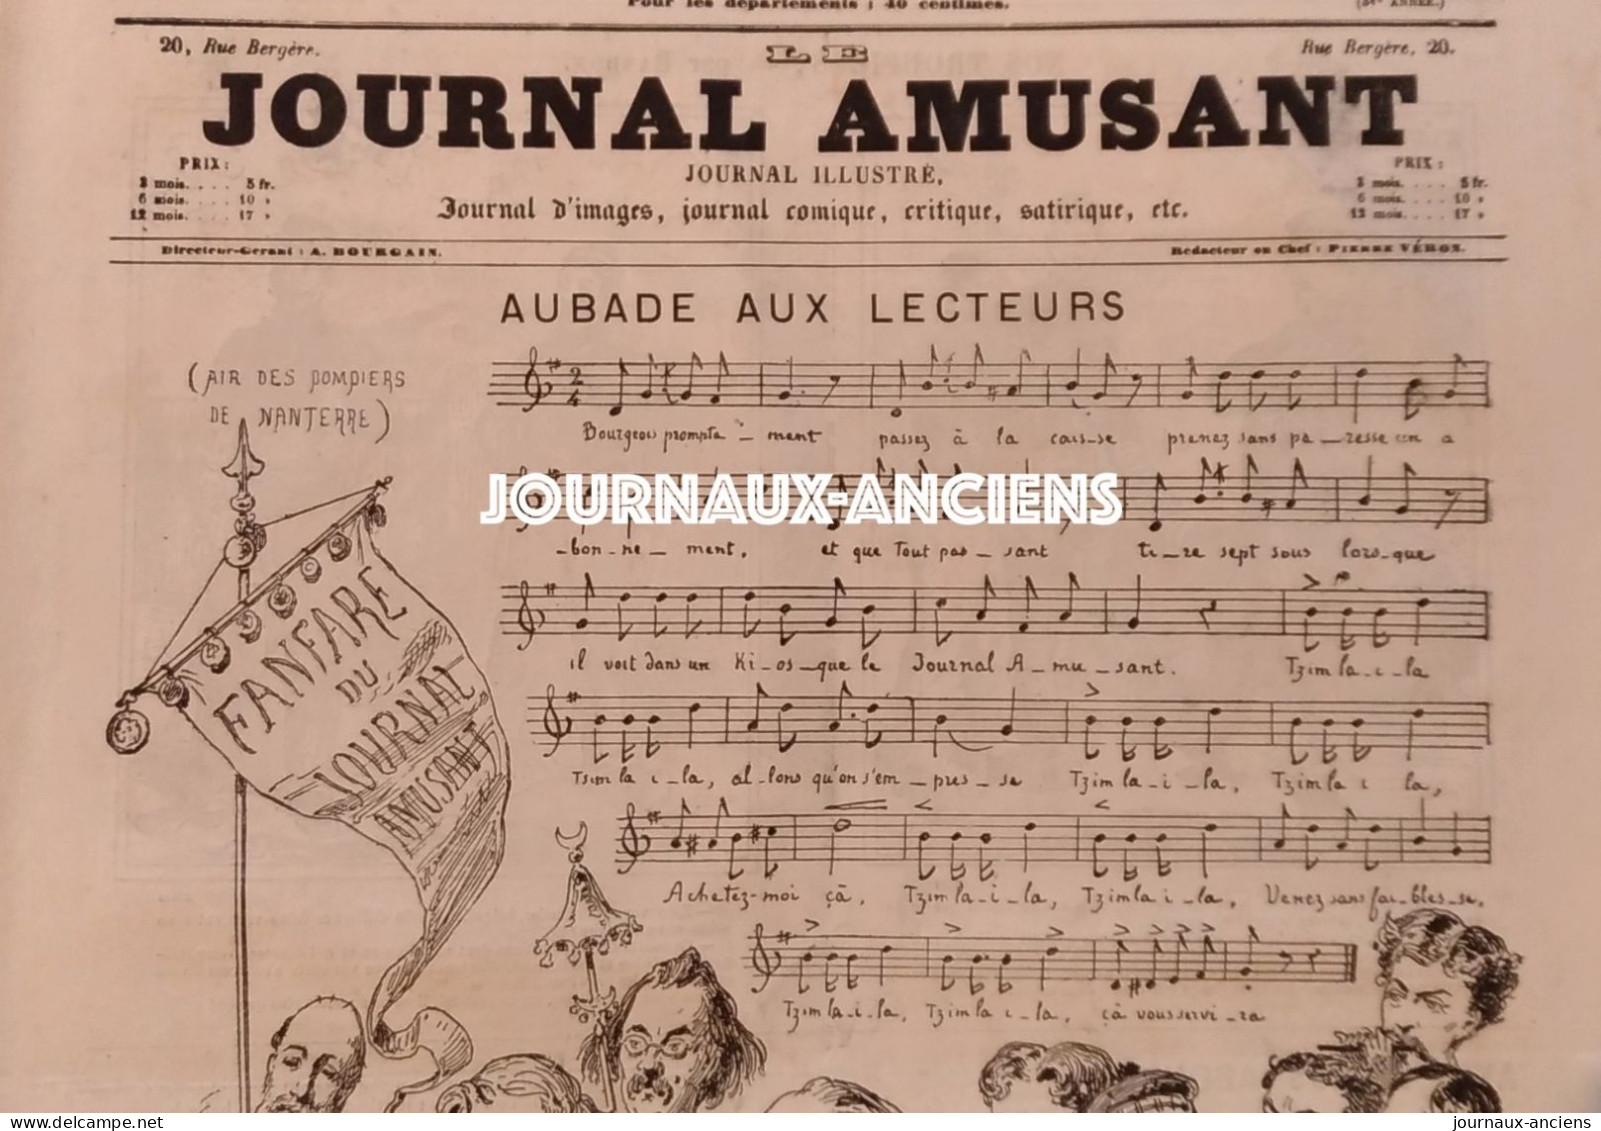 1878 POMPIERS DE NANTERRE - FANFARE DU JOURNAL AMUSANT - AUBADE AUX LECTEURS - LE JOURNAL AMUSANT - Pompiers